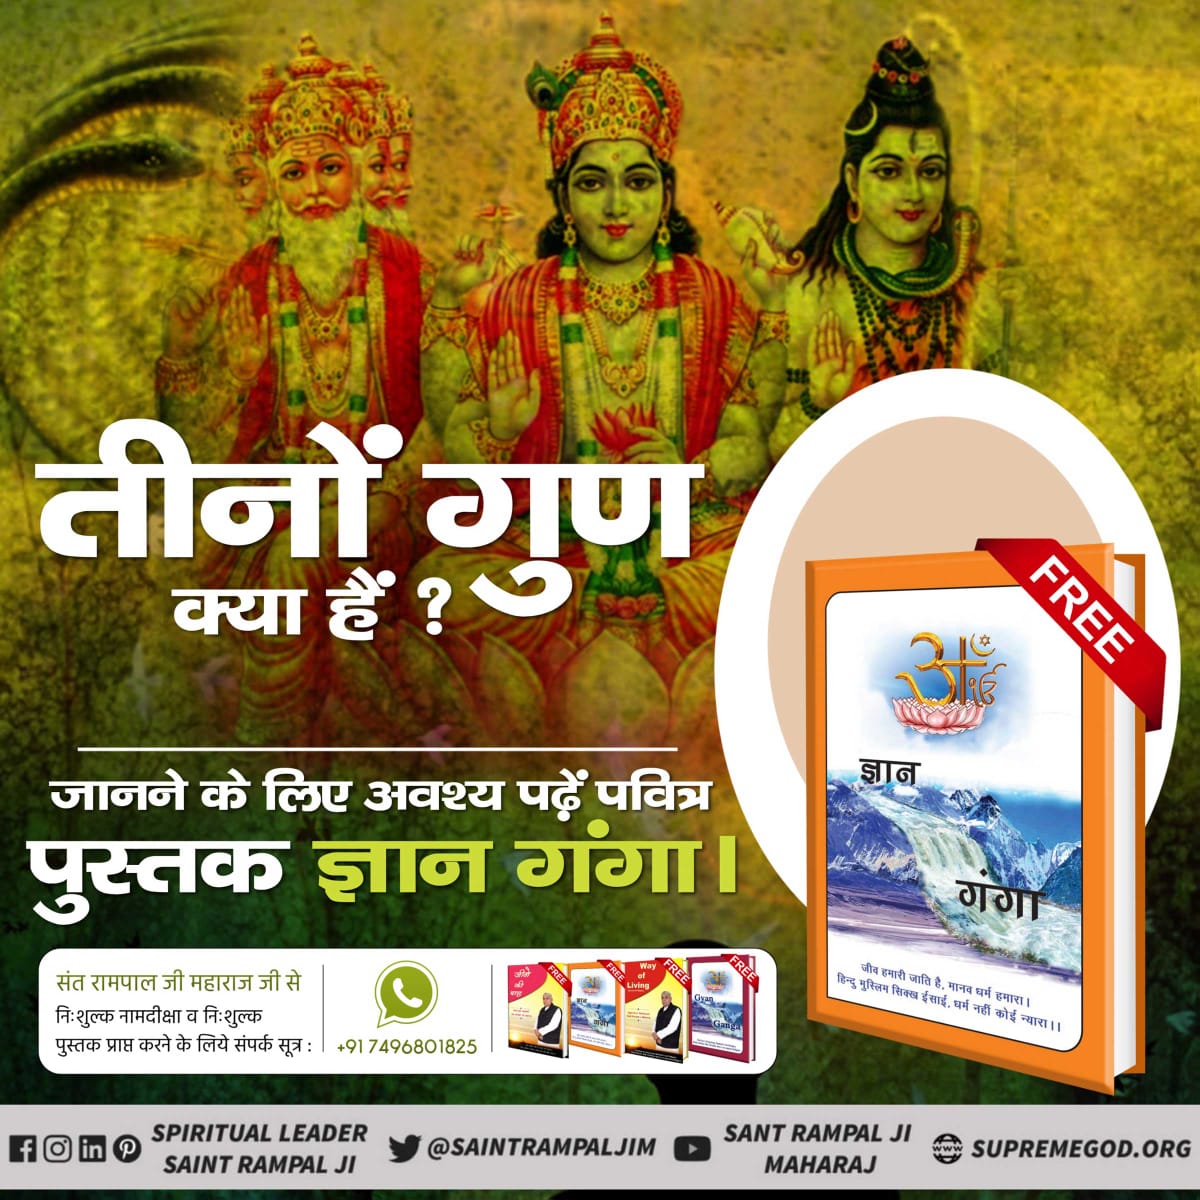 #GyanGanga #hindibooks
#SaintRampalJiQuotes #SantRampalJiQuotes 
📗ब्रह्मा, विष्णु, महेश भी भक्ति में लगे रहते हैं। आओ ज्ञान गंगा पुस्तक पढ़कर जानें ये तीनों भगवान किस परमात्मा की भक्ति करते हैं। #SupremeGod